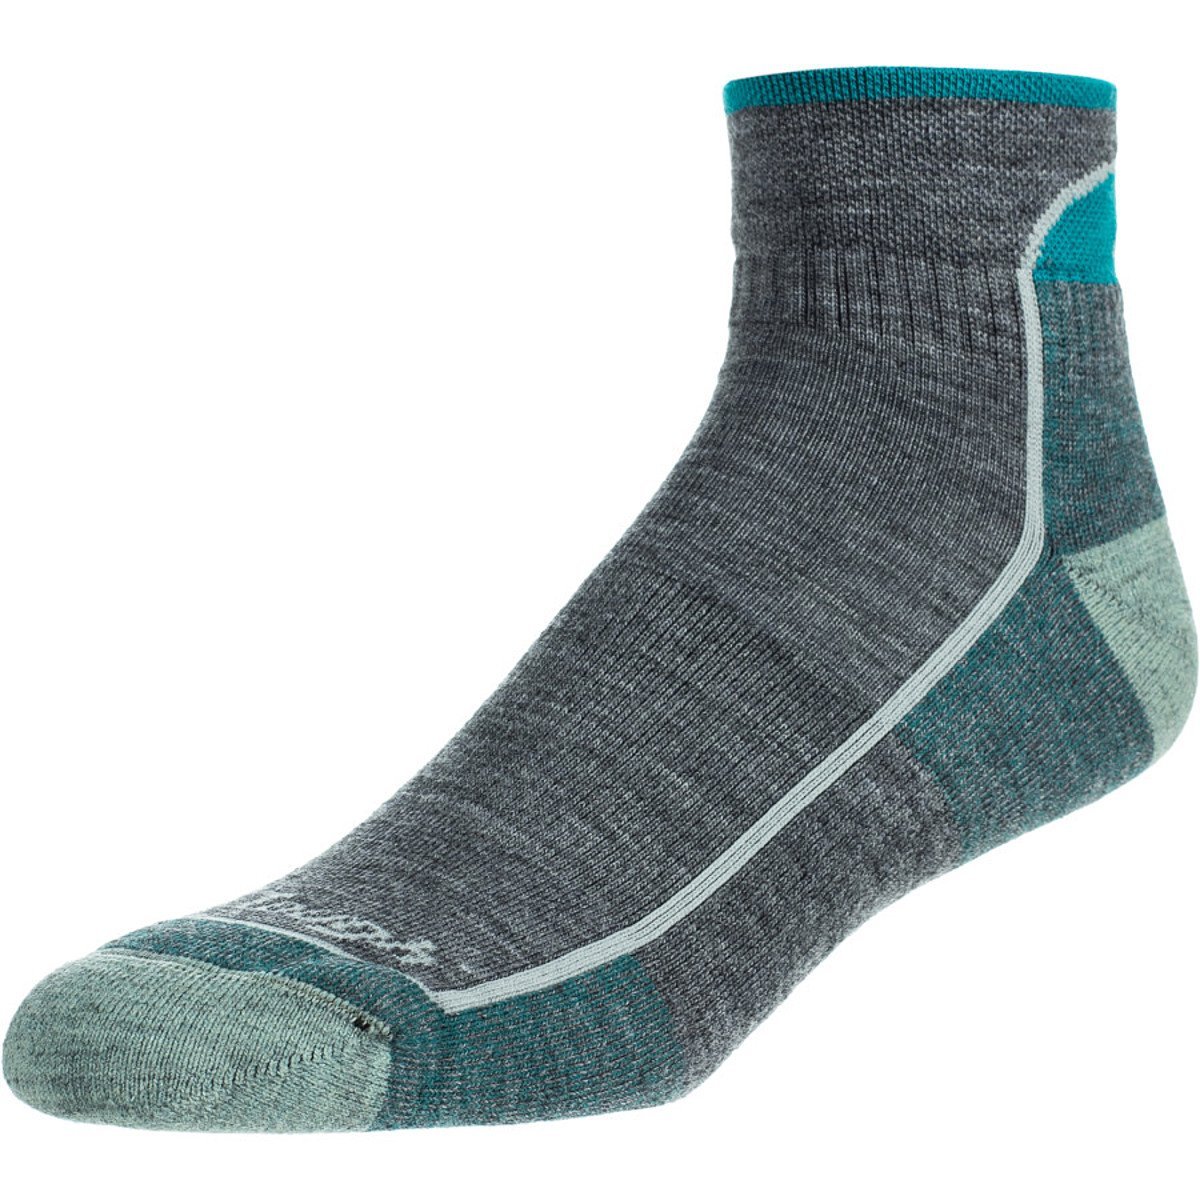 Gear Item of the Week: Darn Tough Wool Socks